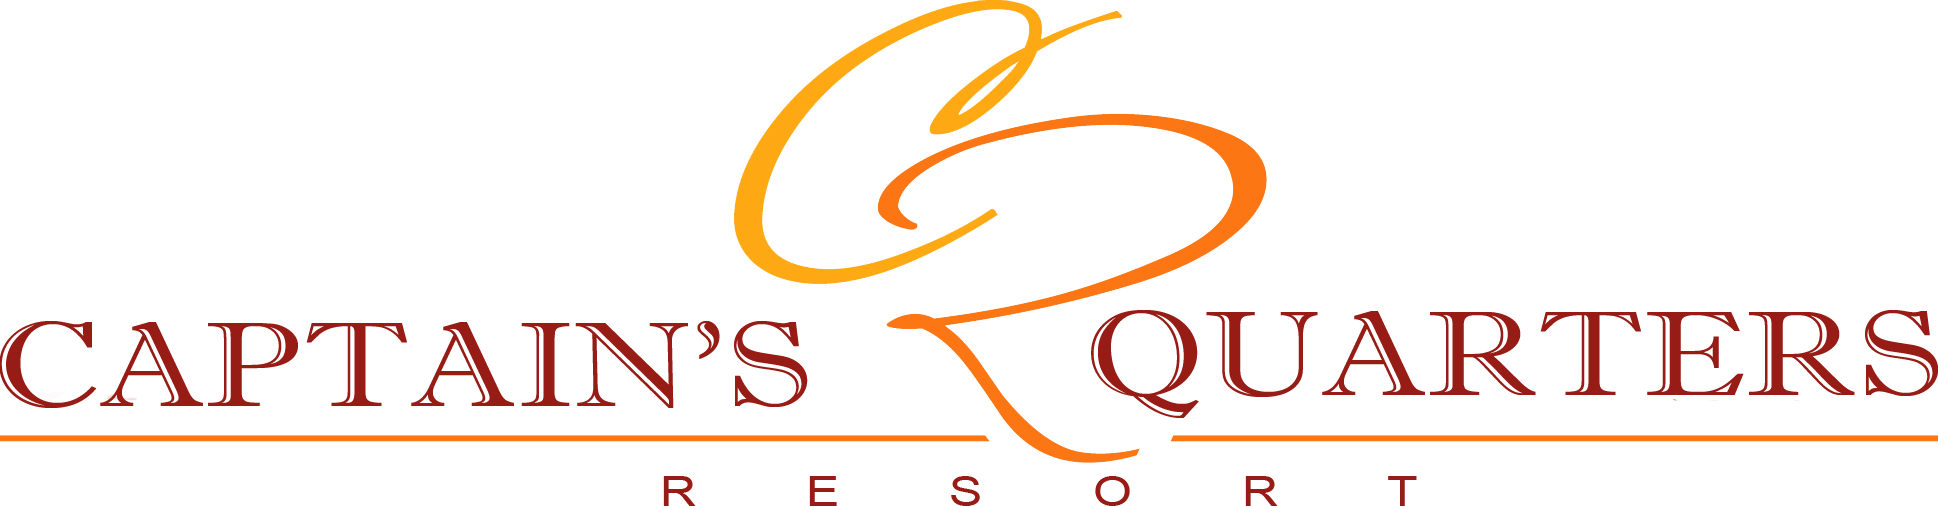 Captain's Quarters Resort Logo